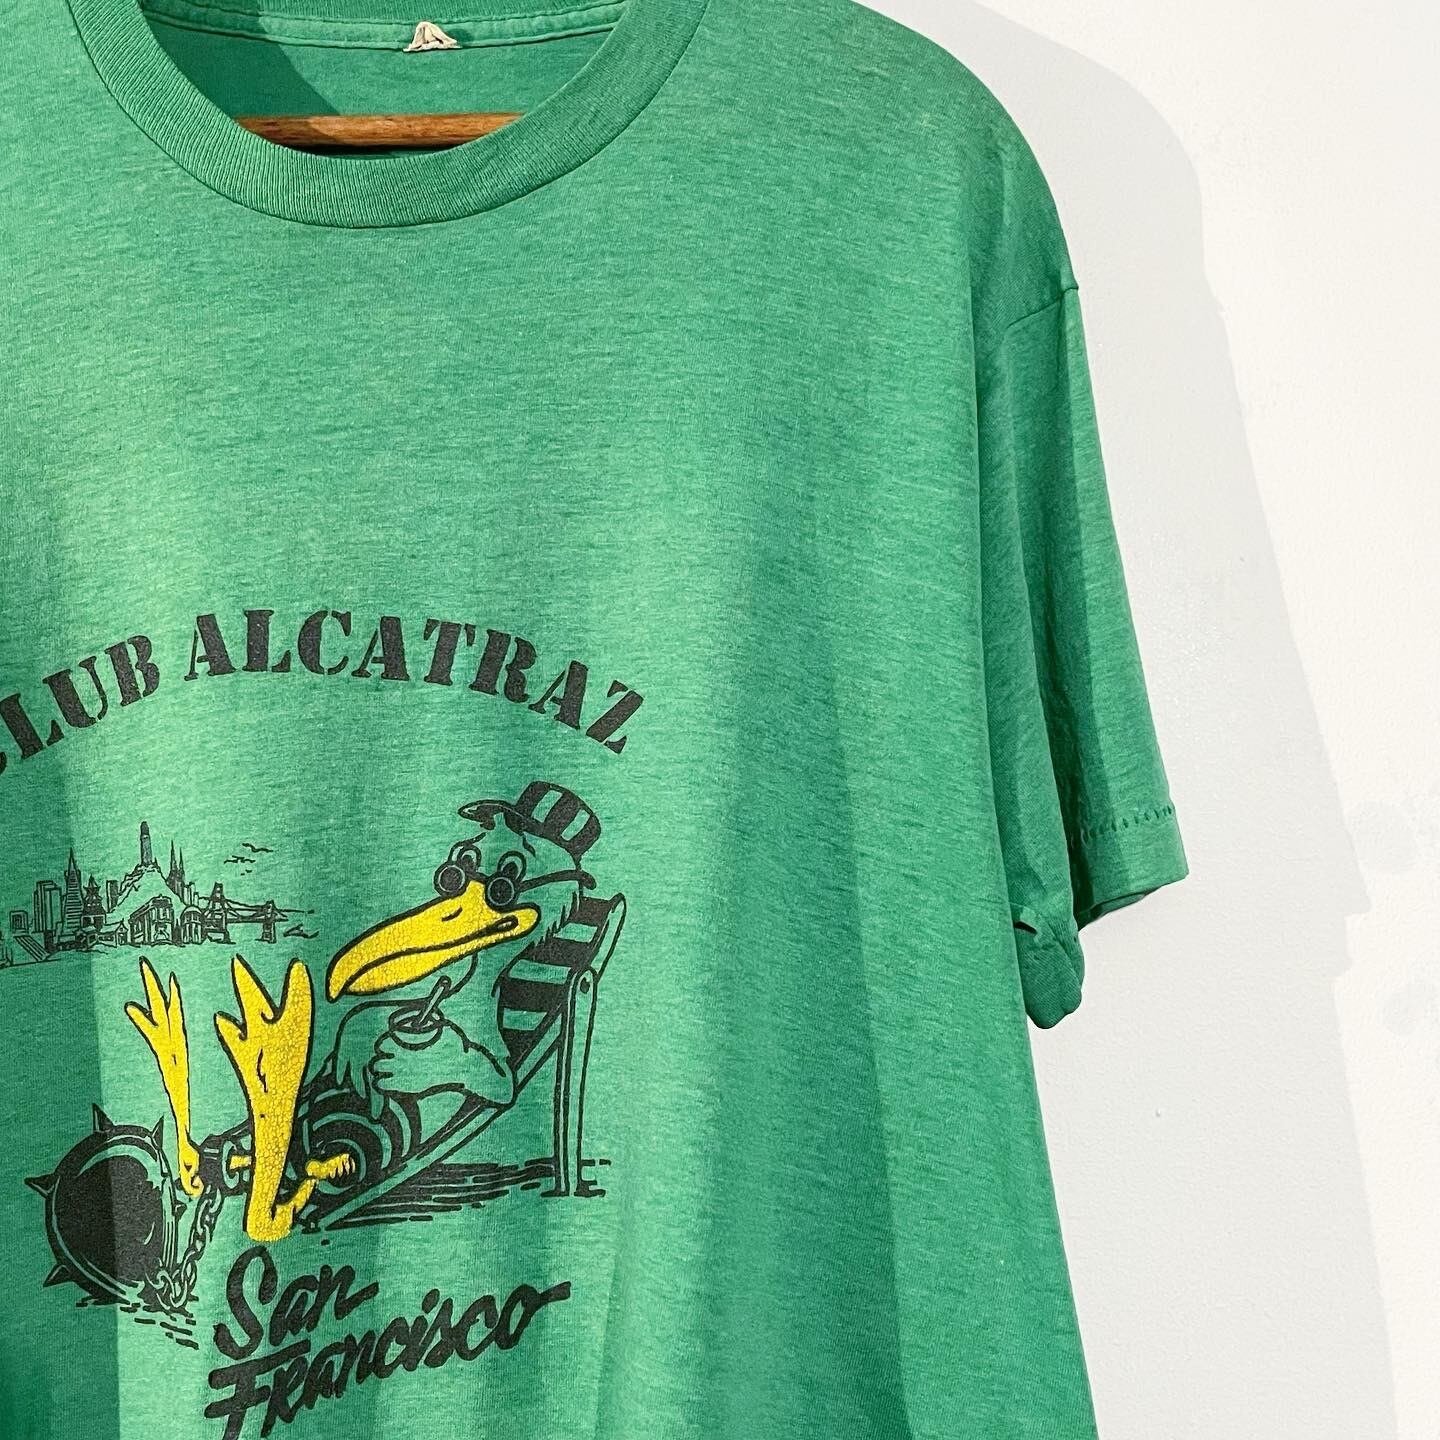 1980's CLUB ALCATRAZ T-shirt | gilet antiques / gilet flagship